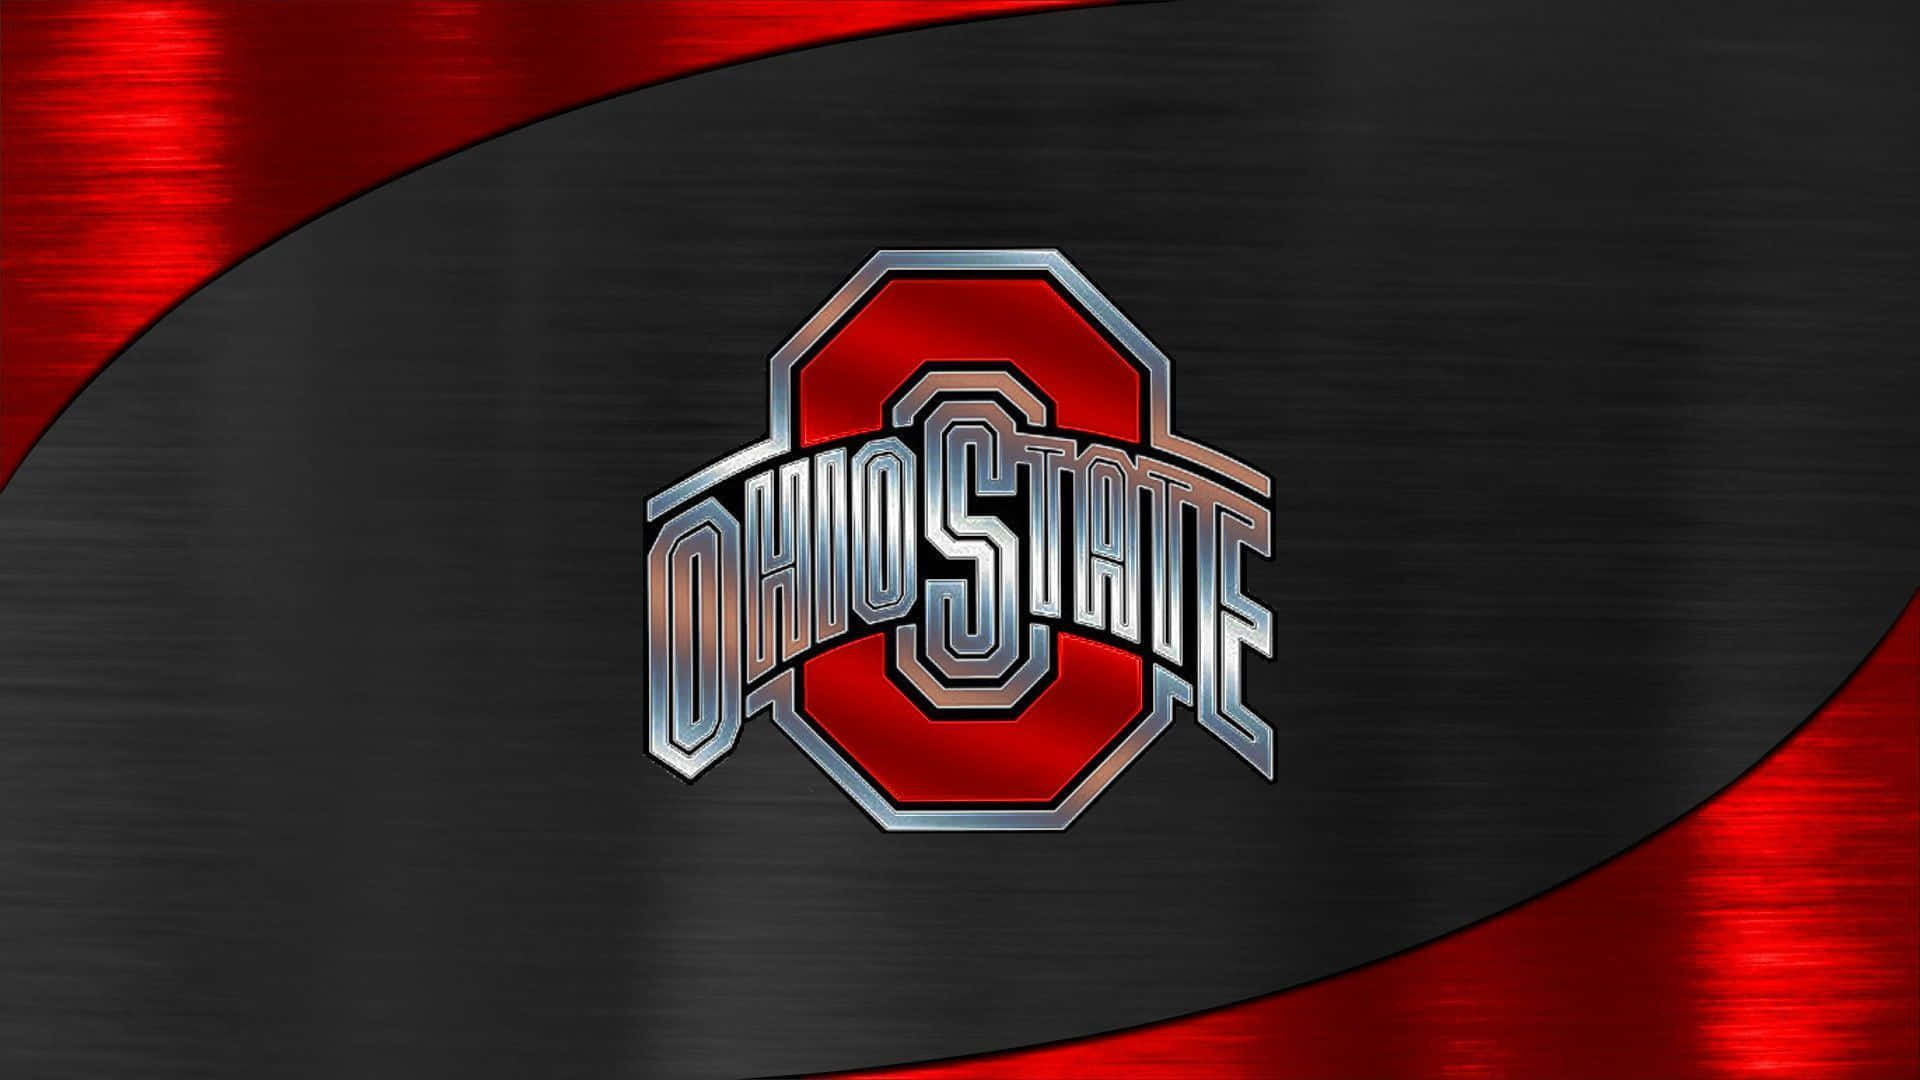 Ohio State-logo 1920 X 1080 Wallpaper